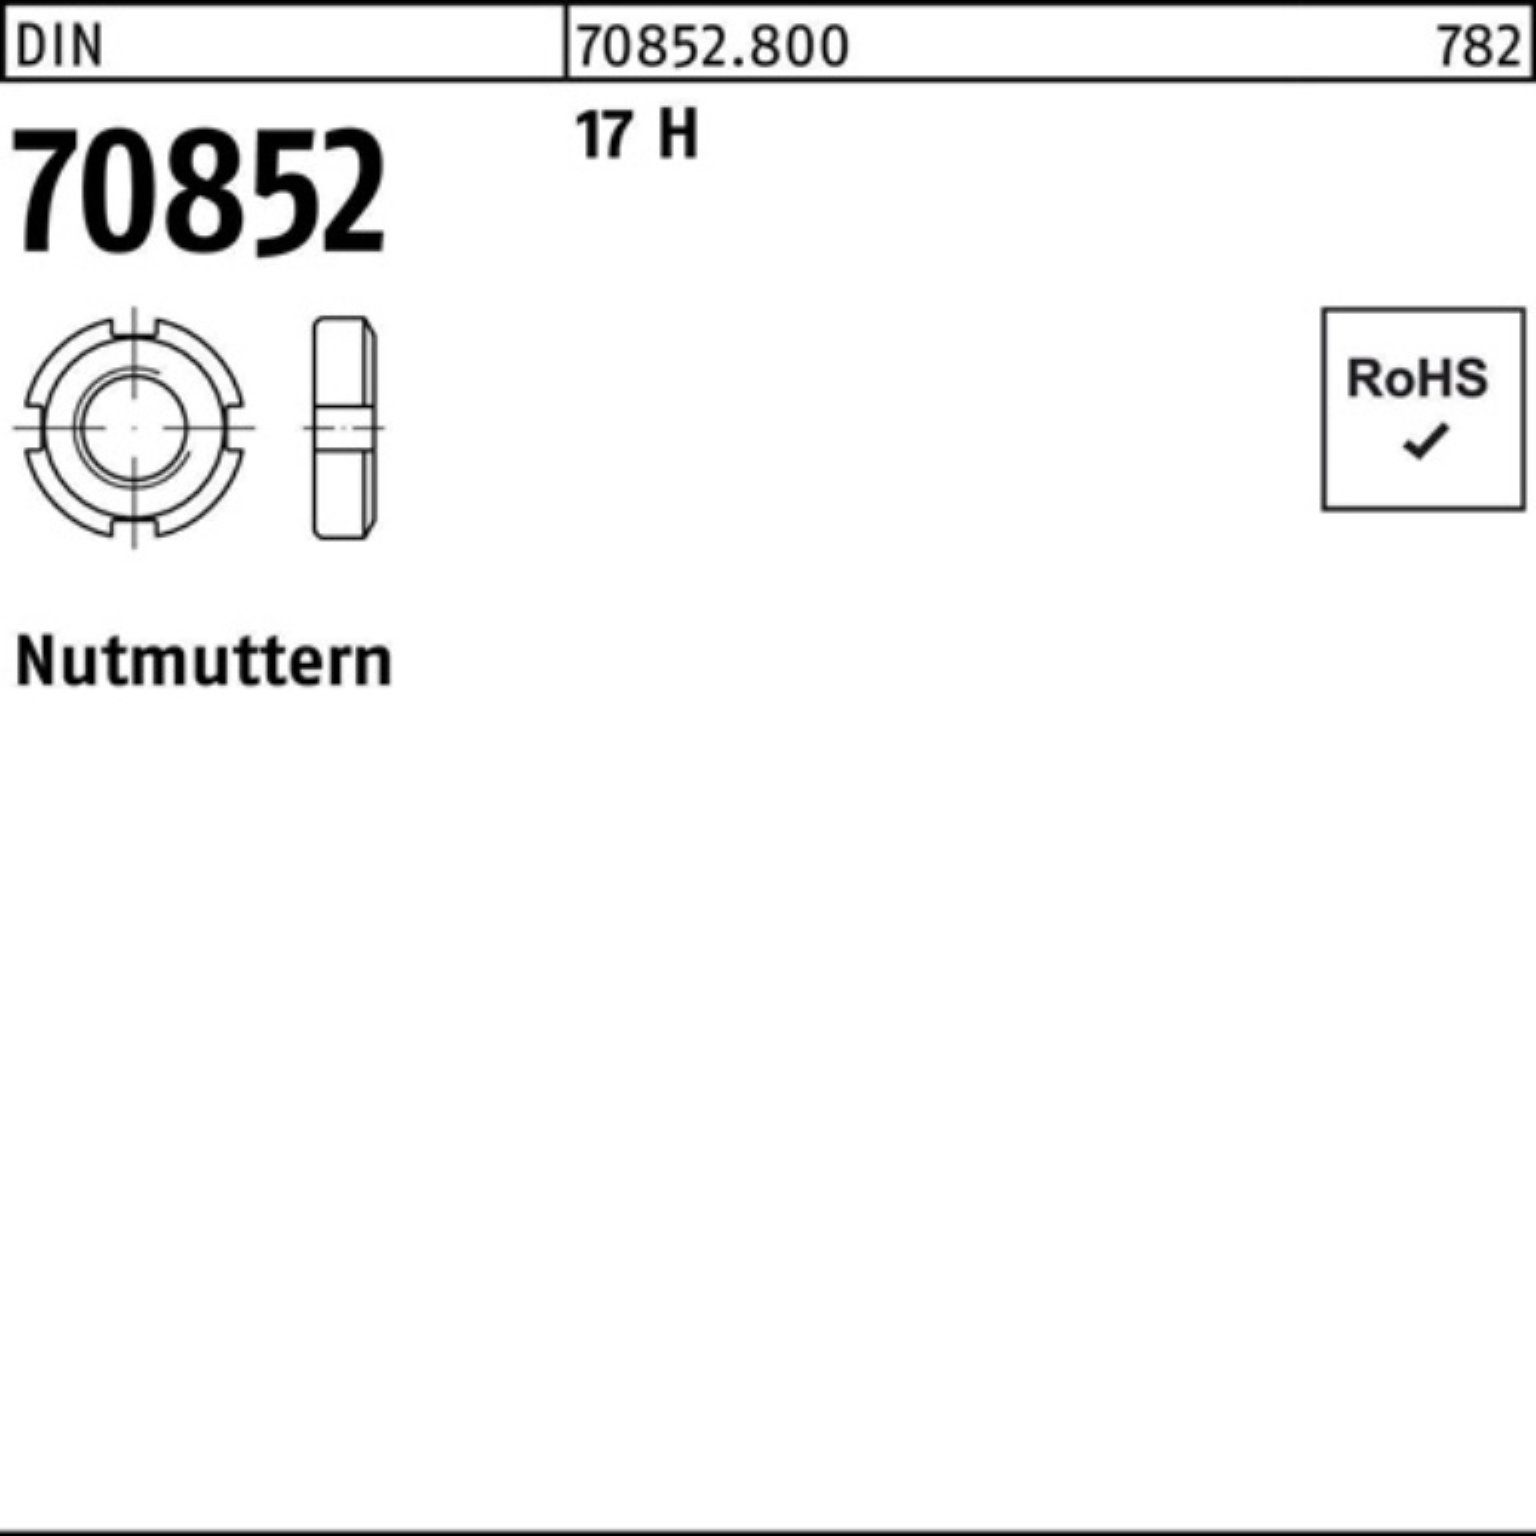 Reyher Nutmutter 100er Pack Nutmutter DIN 70852 M20x 1,5 17 H 10 Stück DIN 70852 17 H